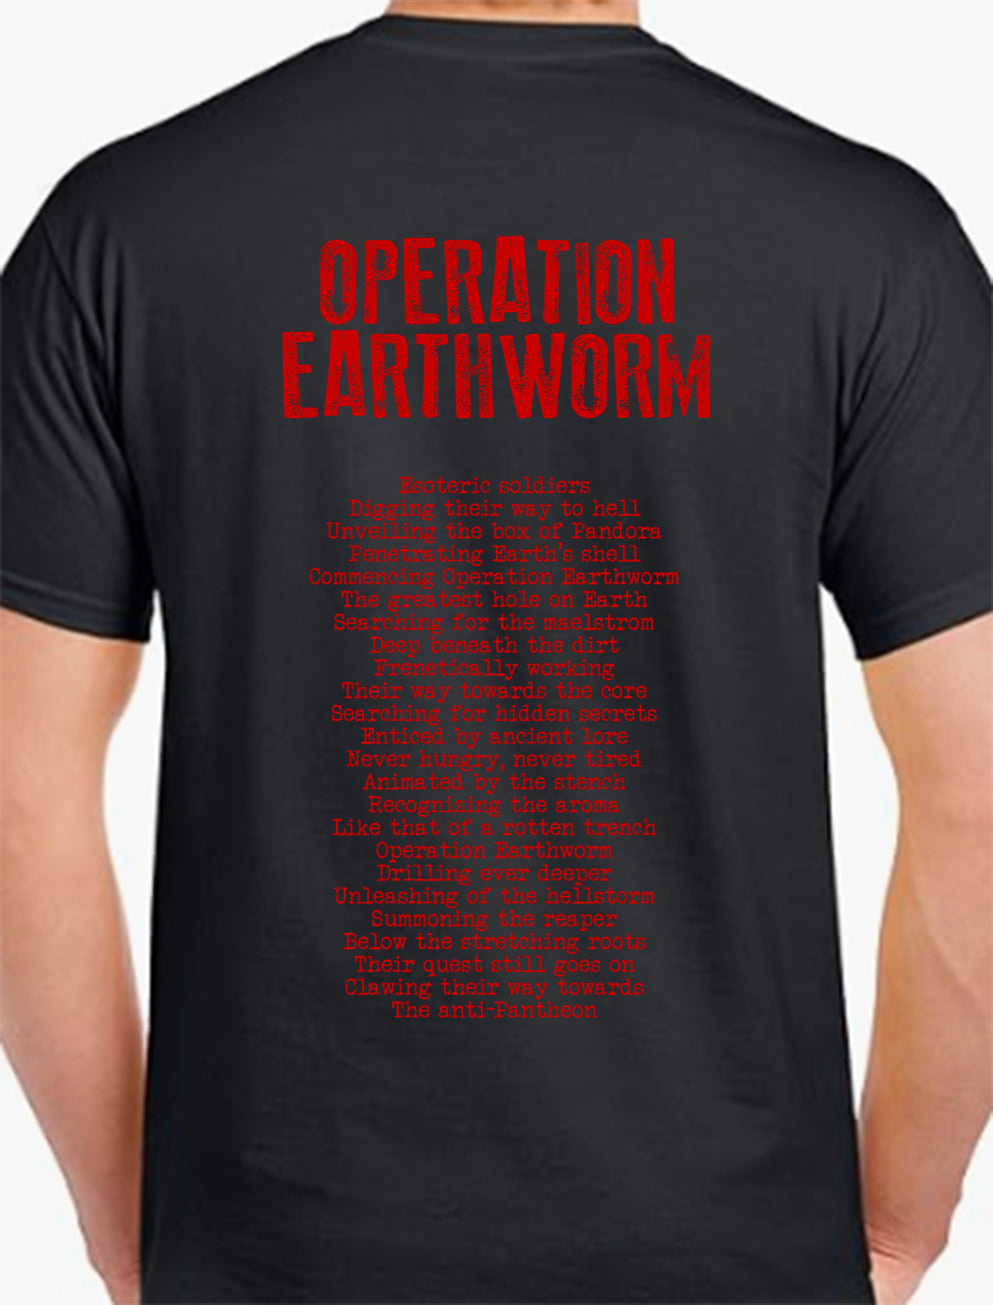 001 - T-shirt - Operation Earthworm